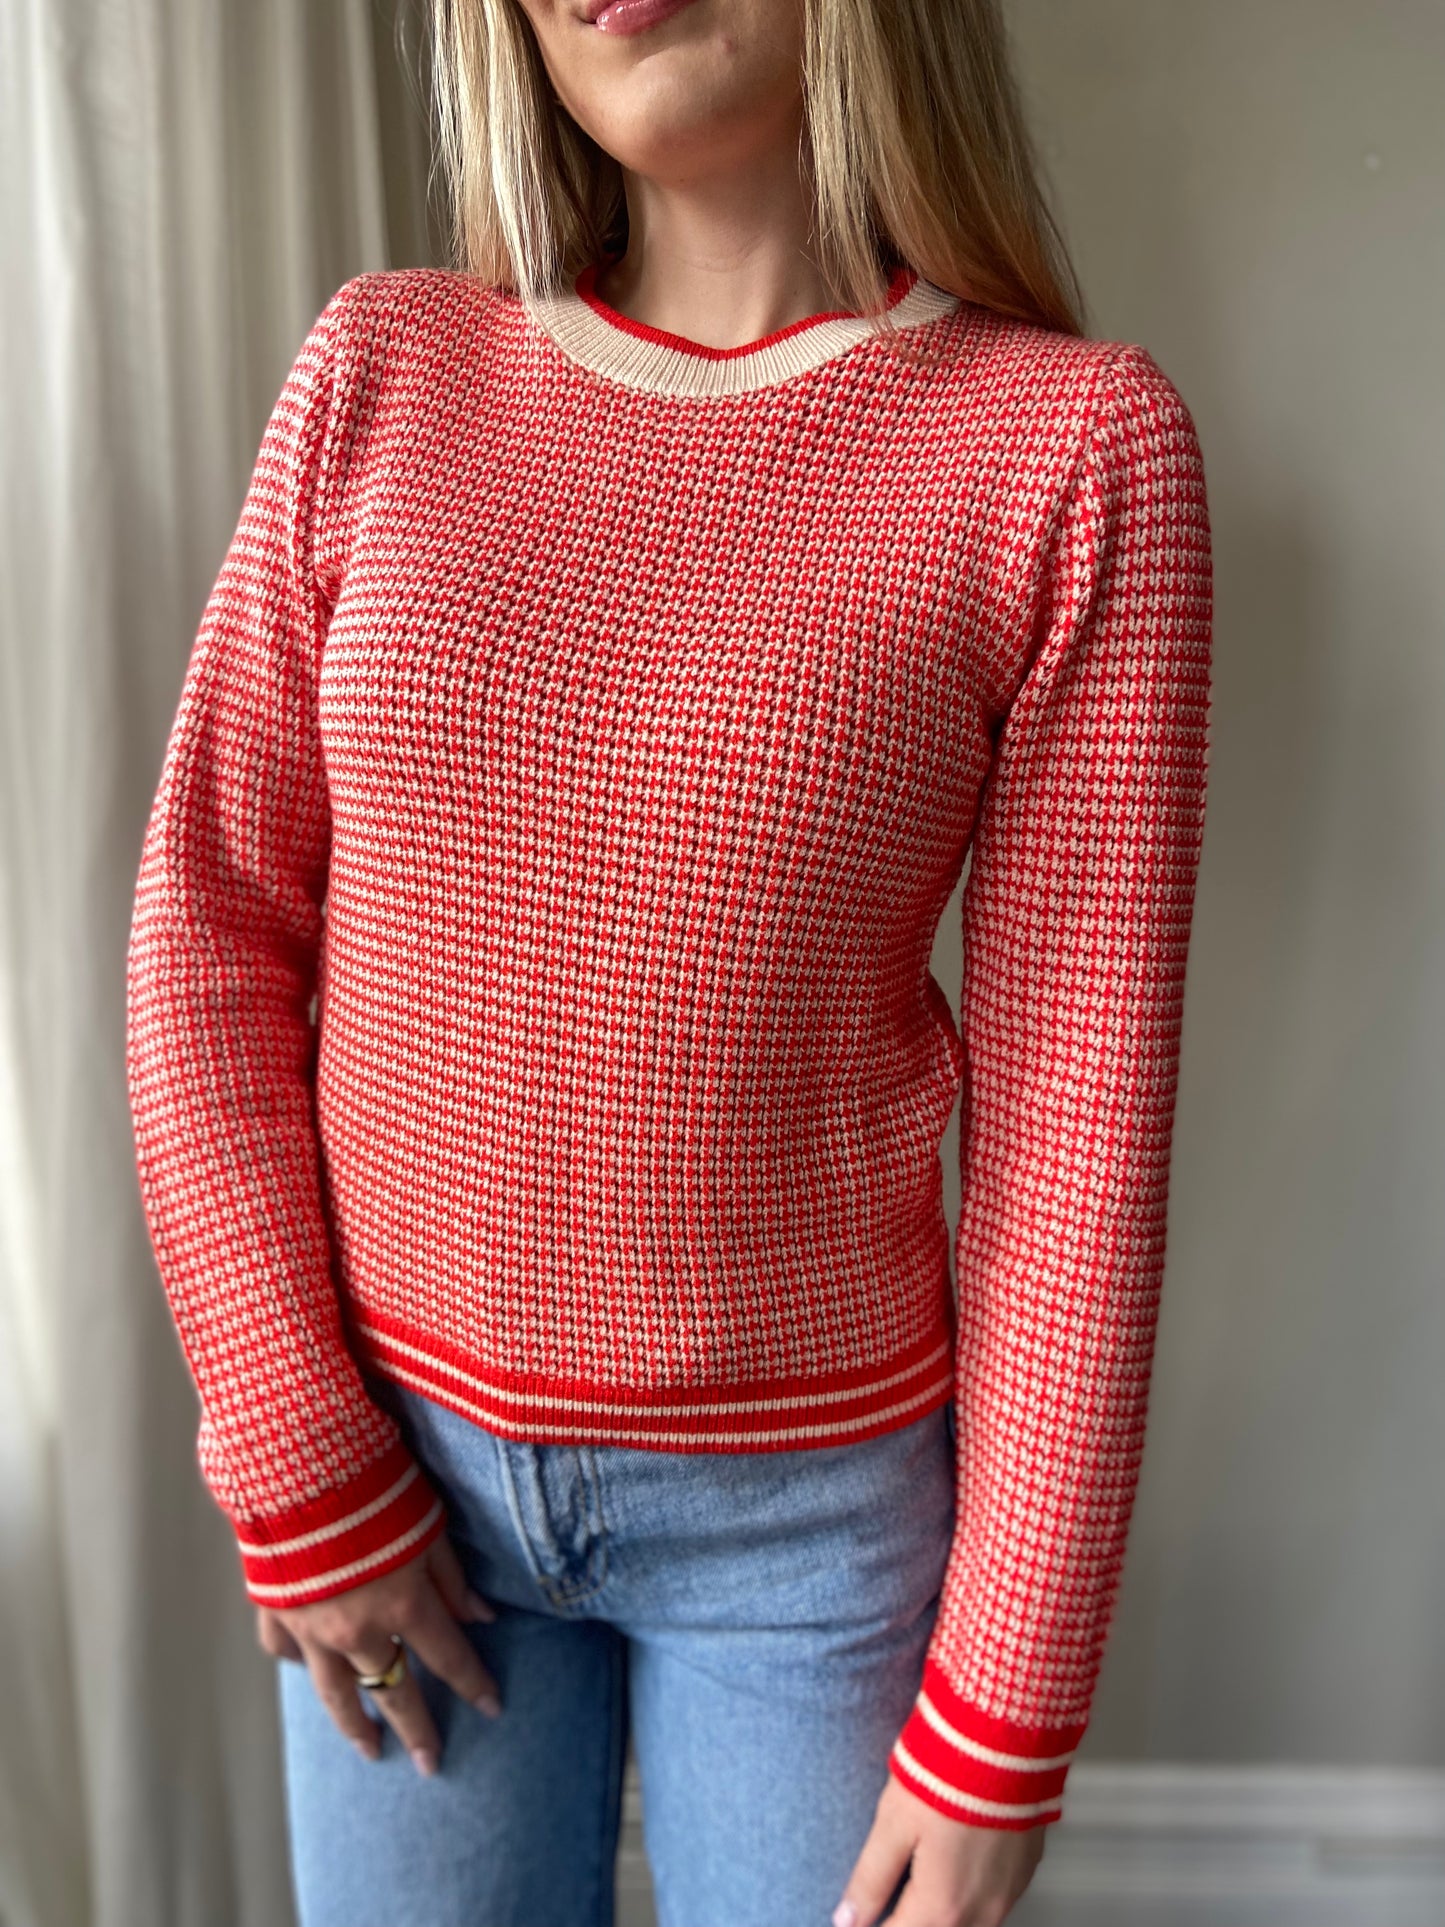 Hilary Sweater